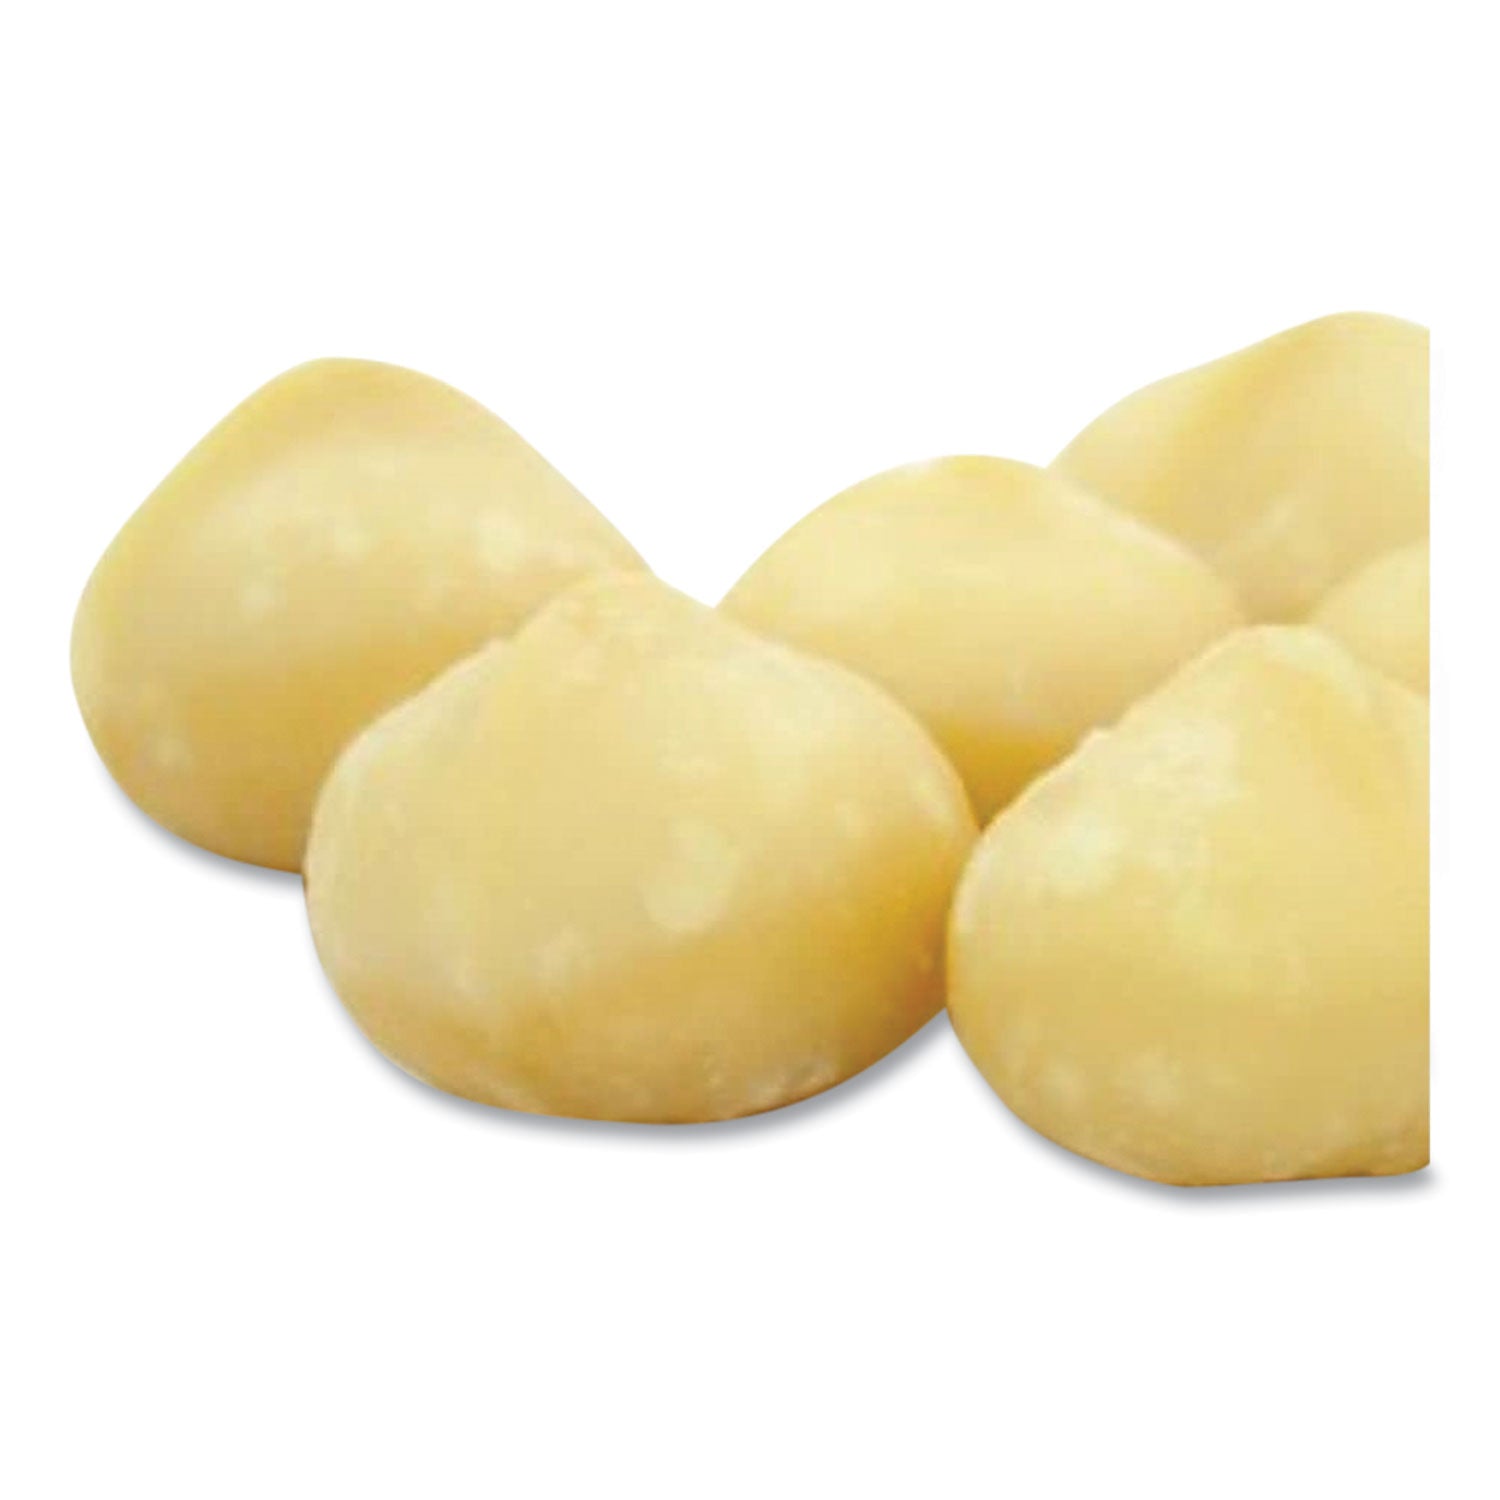 macadamia-nuts-dry-roasted-salted-4-oz-bag-12-carton_sef6070 - 2